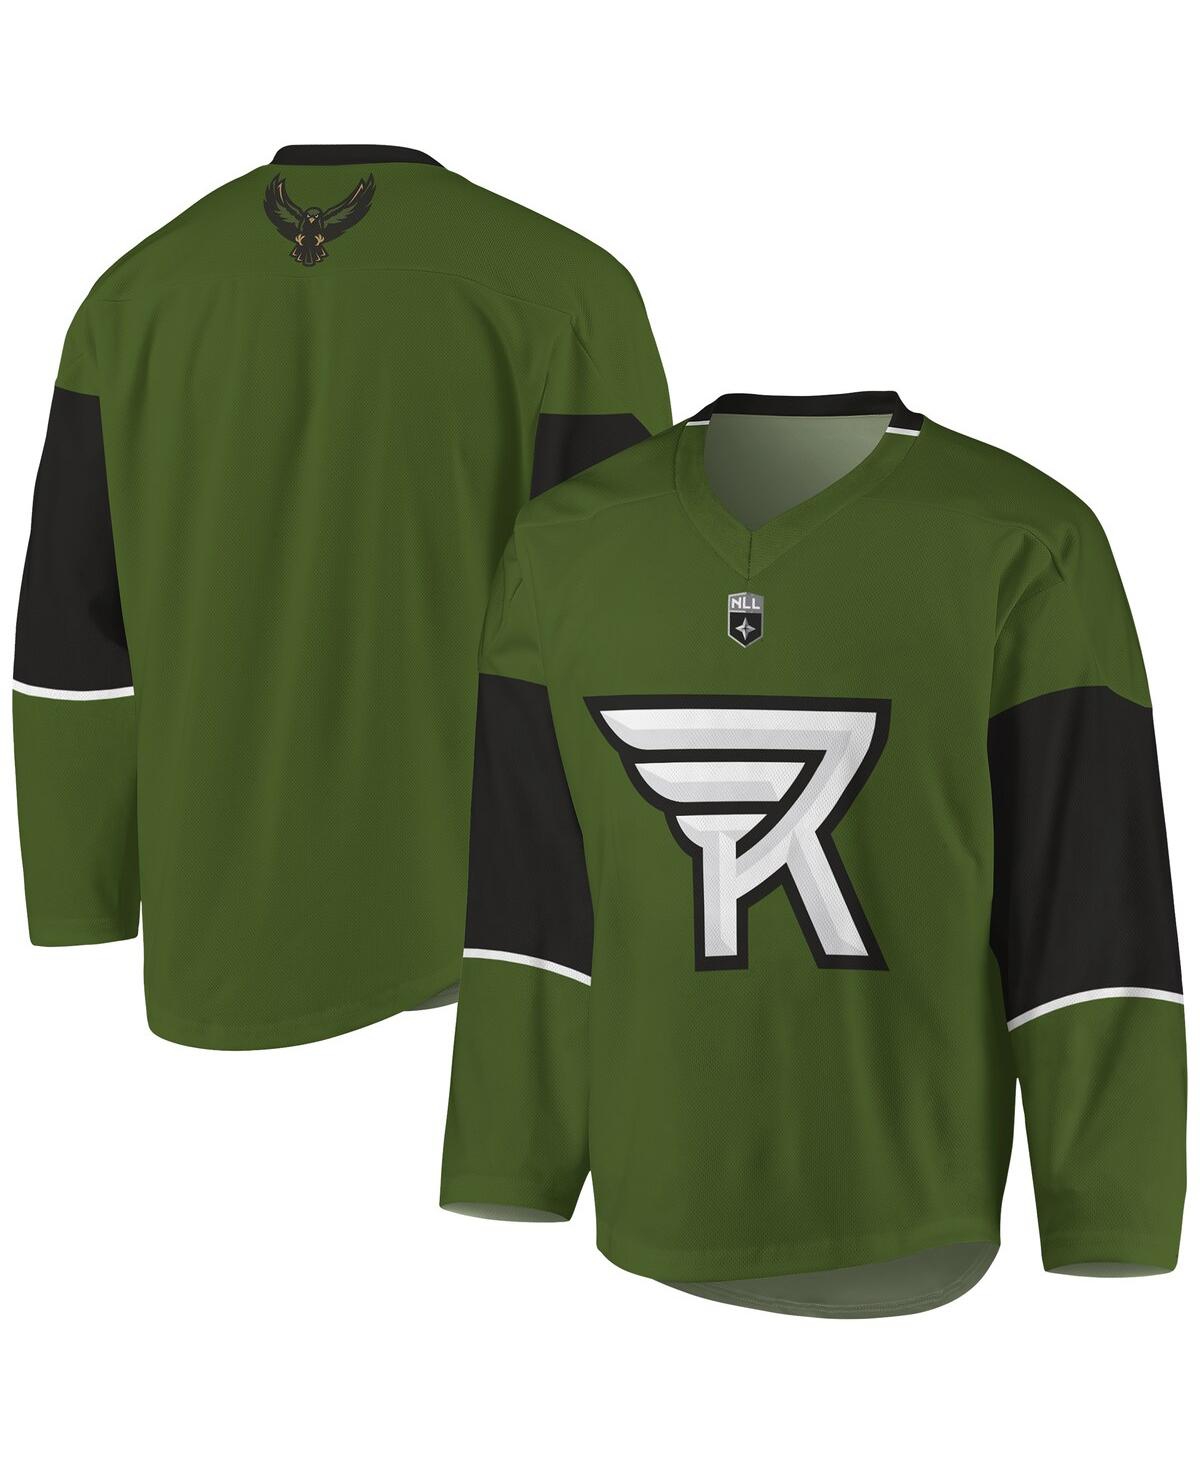 Men's Green, Black Rochester Knighthawks Replica Jersey - Green, Black